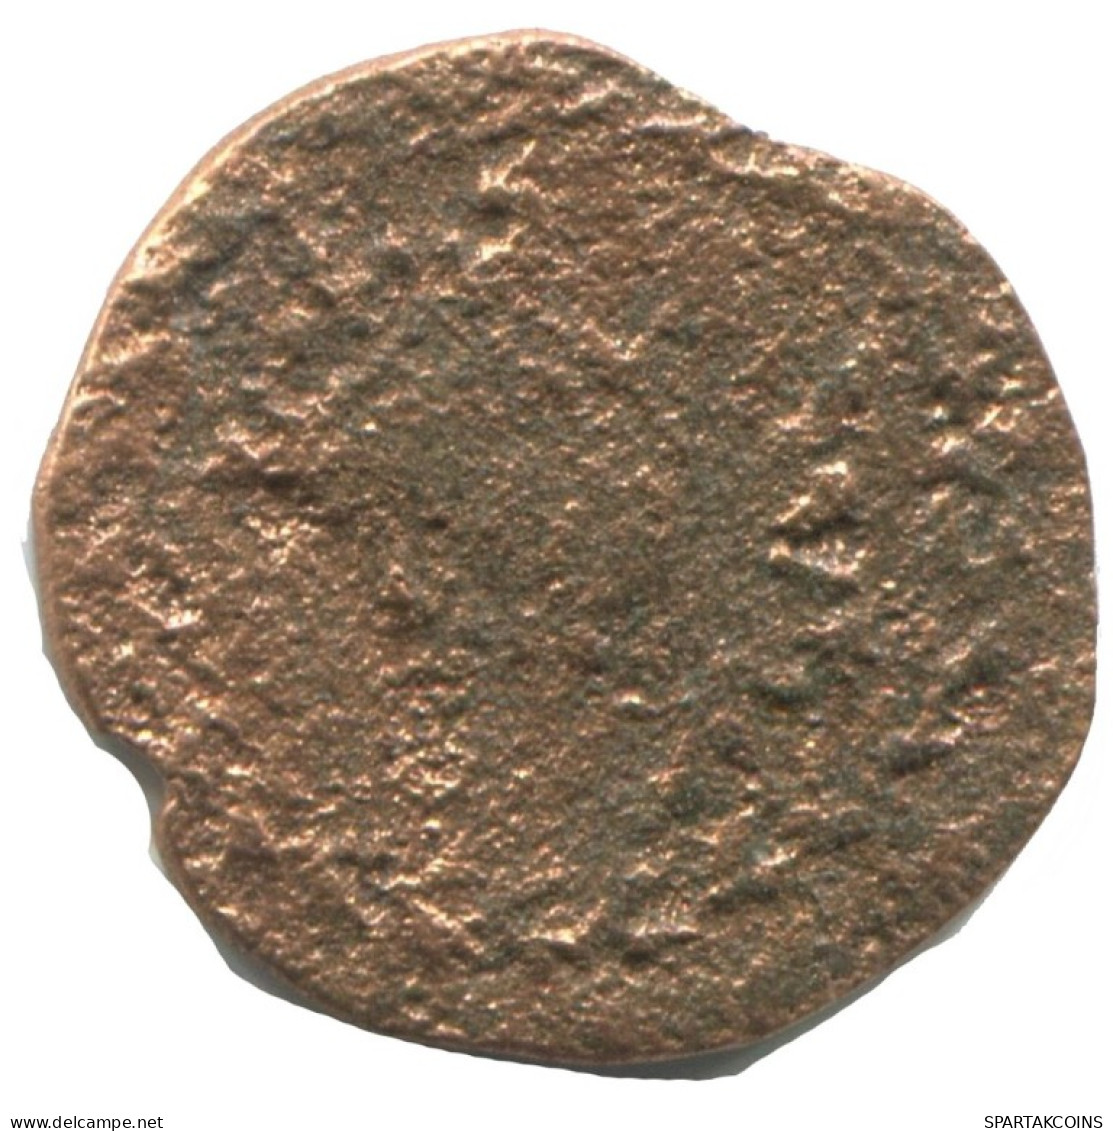 Authentic Original MEDIEVAL EUROPEAN Coin 0.8g/15mm #AC353.8.F.A - Autres – Europe